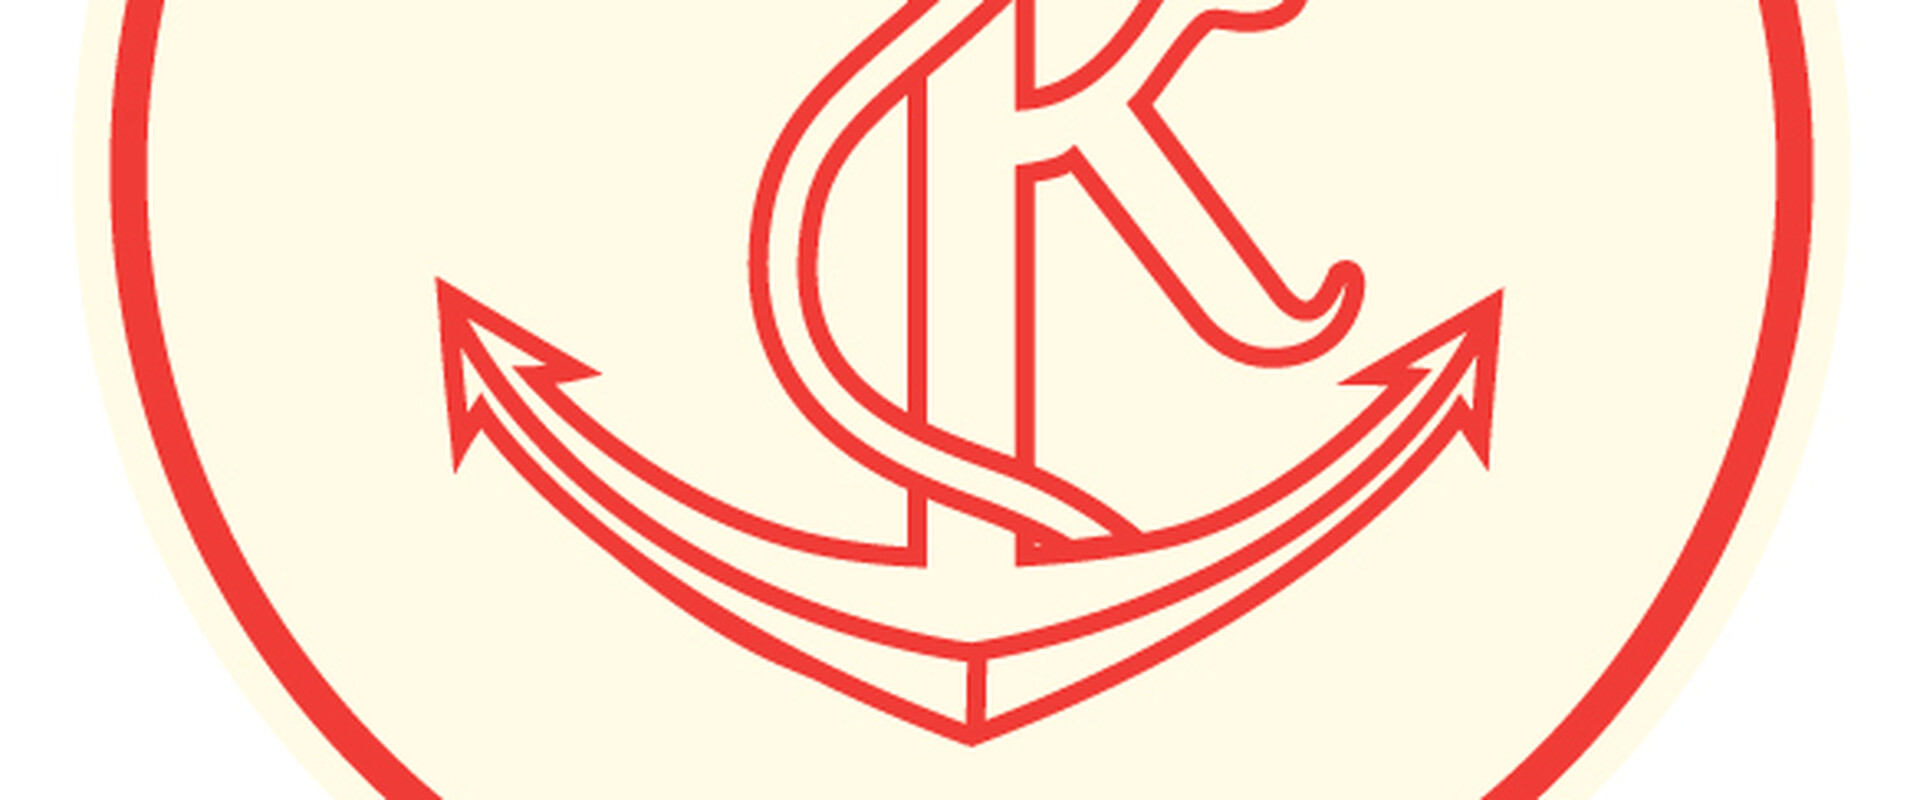 Kristiinankaupunki logo pun nega rgb5